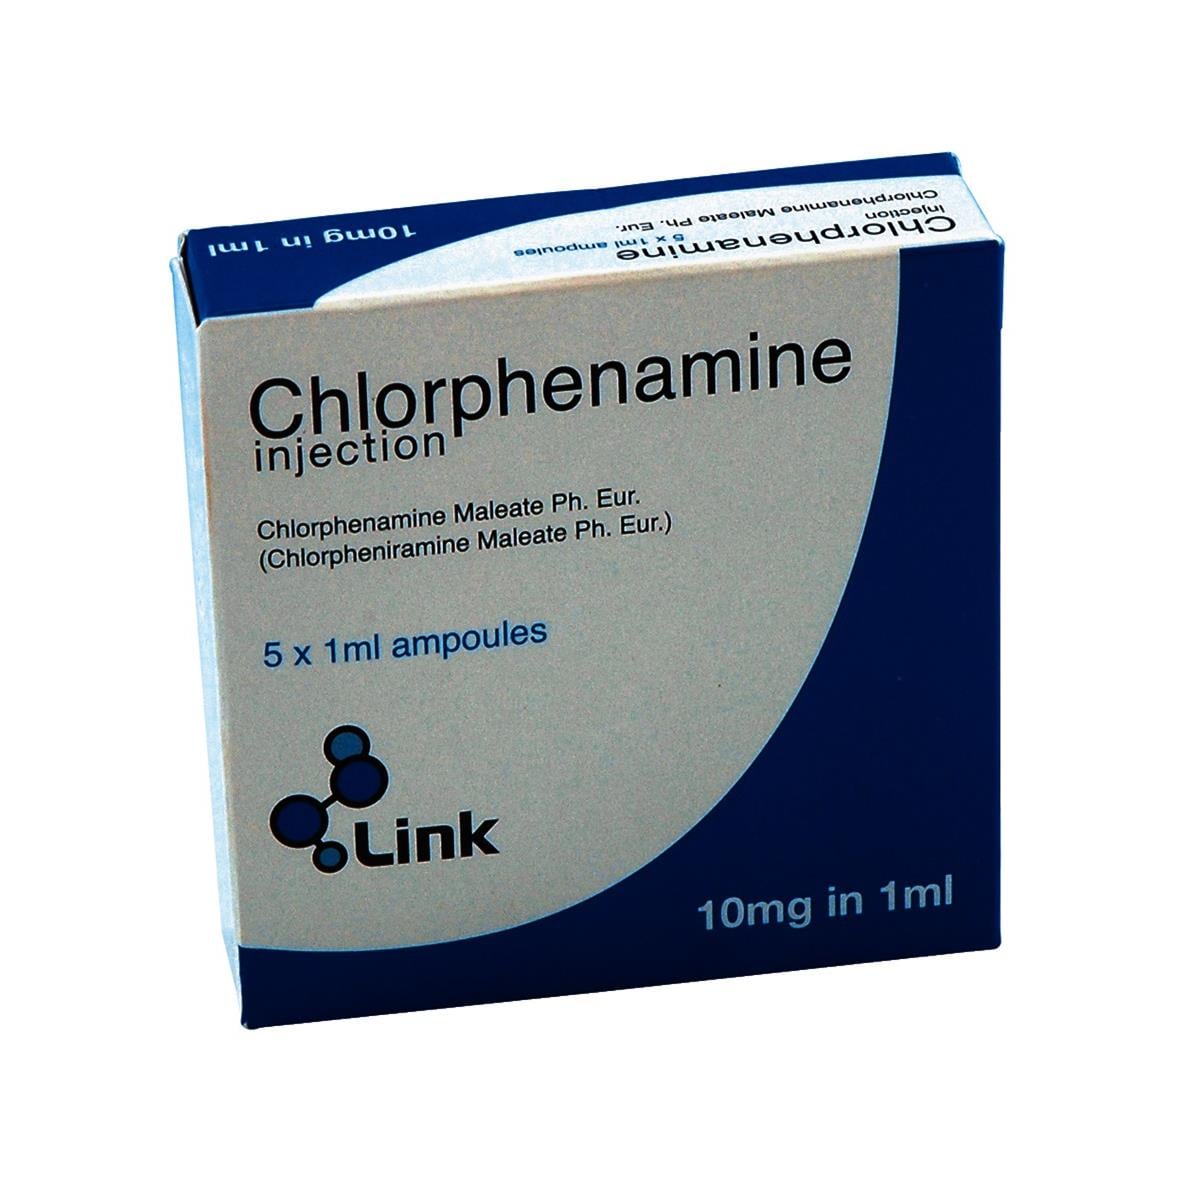 Chlorphenamine Injection 10mg/1ml Amp 5pk